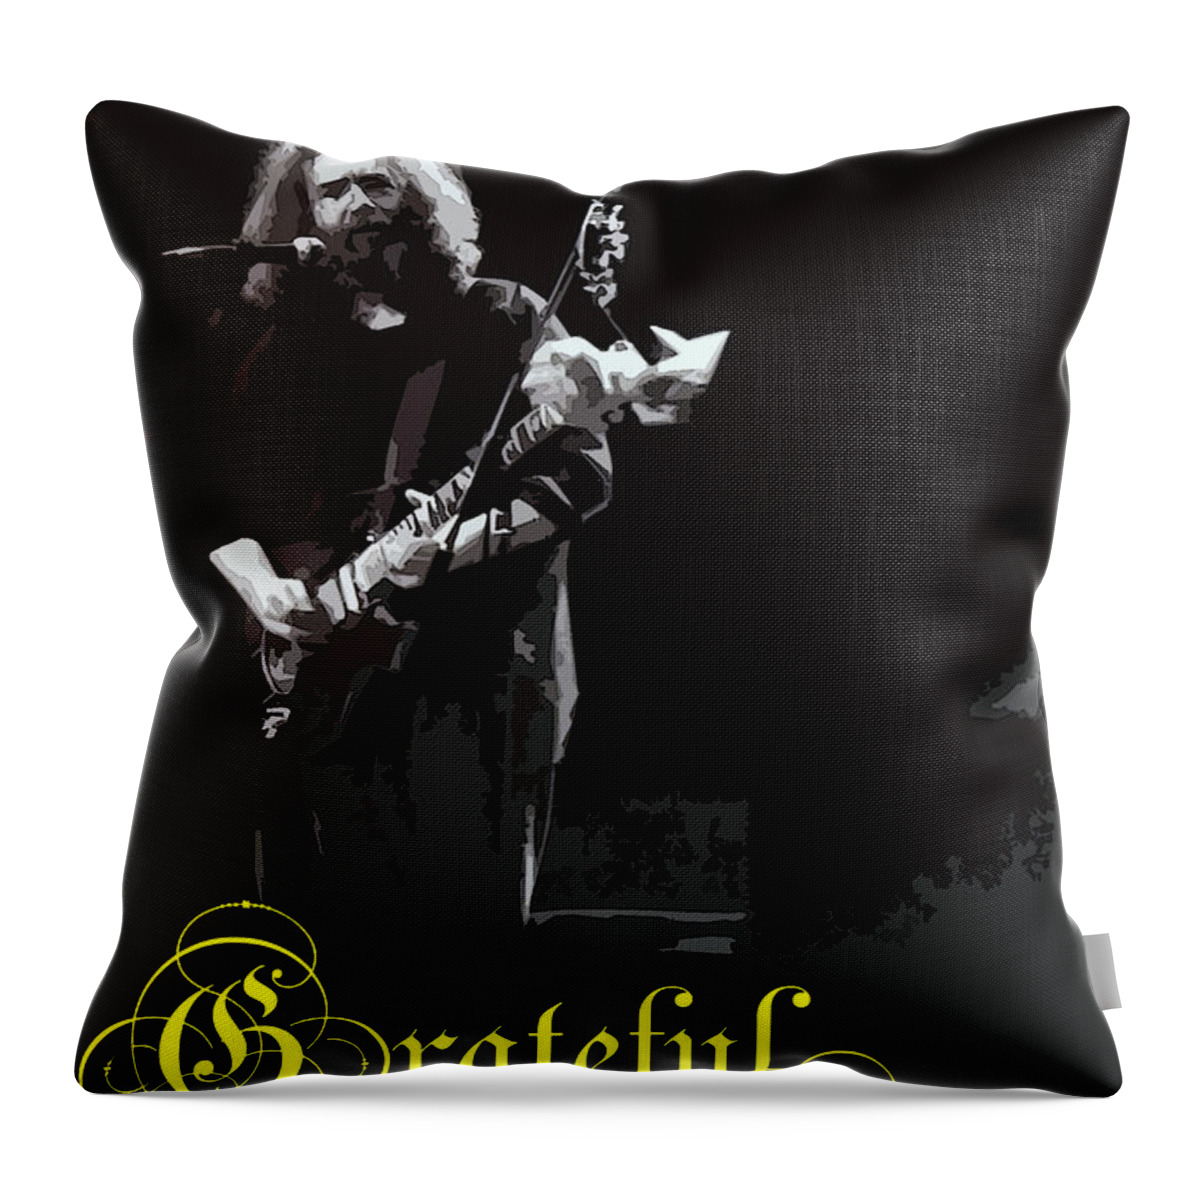 Grateful Throw Pillow featuring the photograph Grateful Dead by Susan Carella